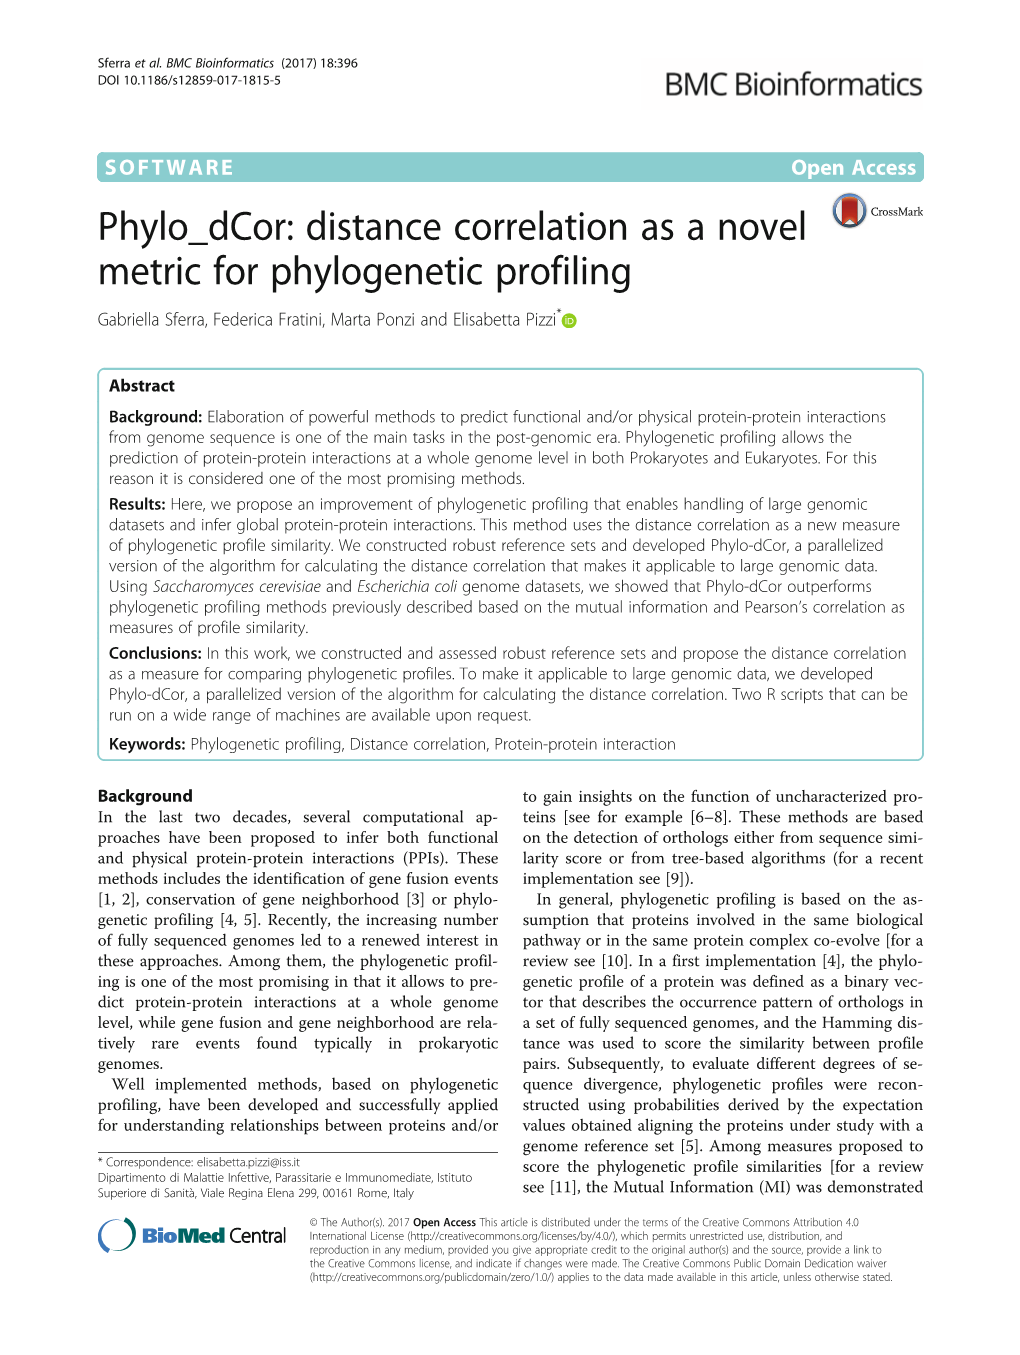 Phylo Dcor: Distance Correlation As a Novel Metric for Phylogenetic Profiling Gabriella Sferra, Federica Fratini, Marta Ponzi and Elisabetta Pizzi*